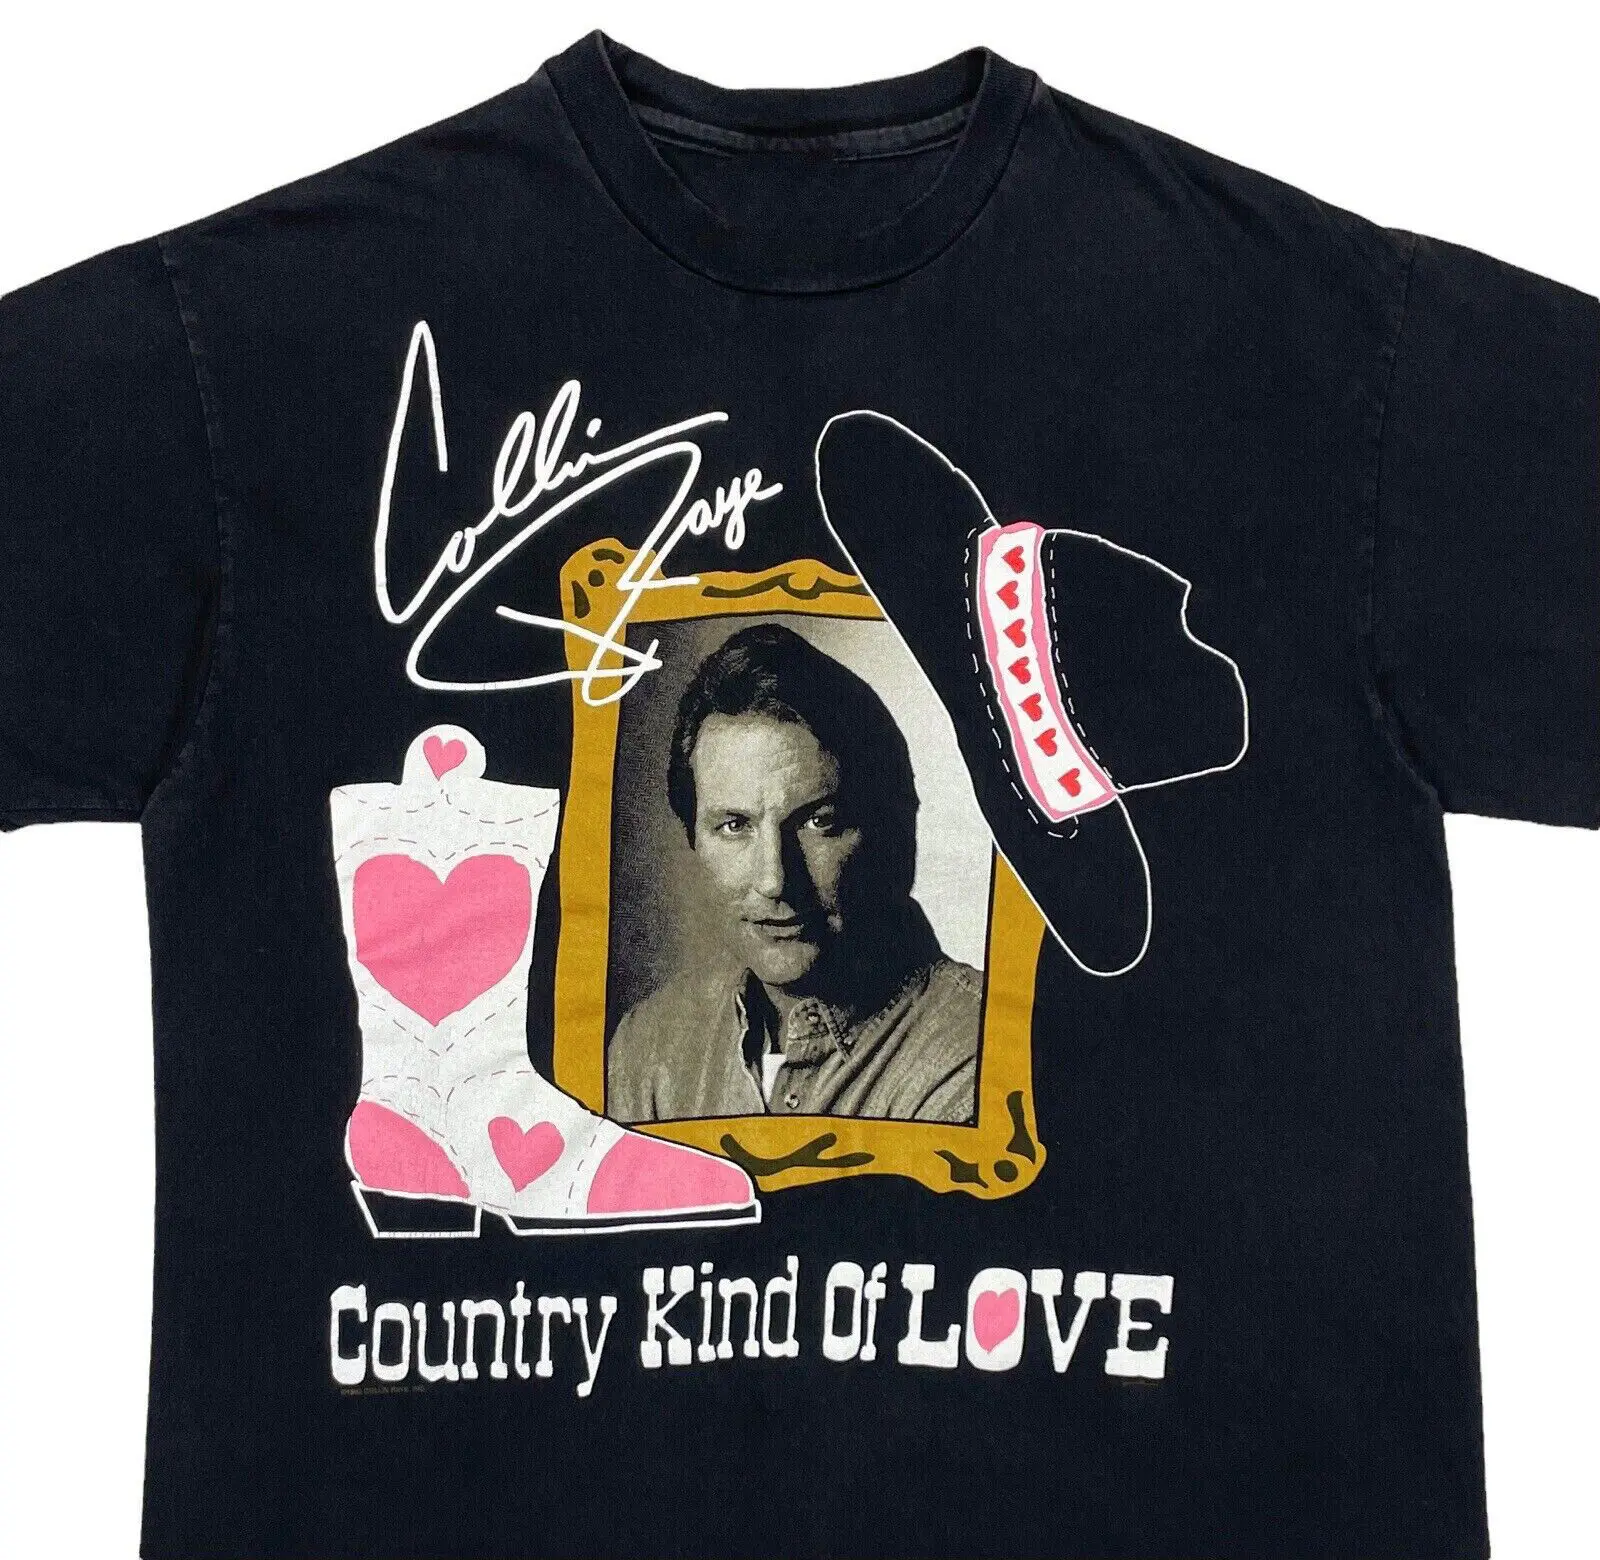 Винтажная Черная хлопчатобумажная рубашка HH358 с длинными рукавами Collin Raye Country Kind Of Love